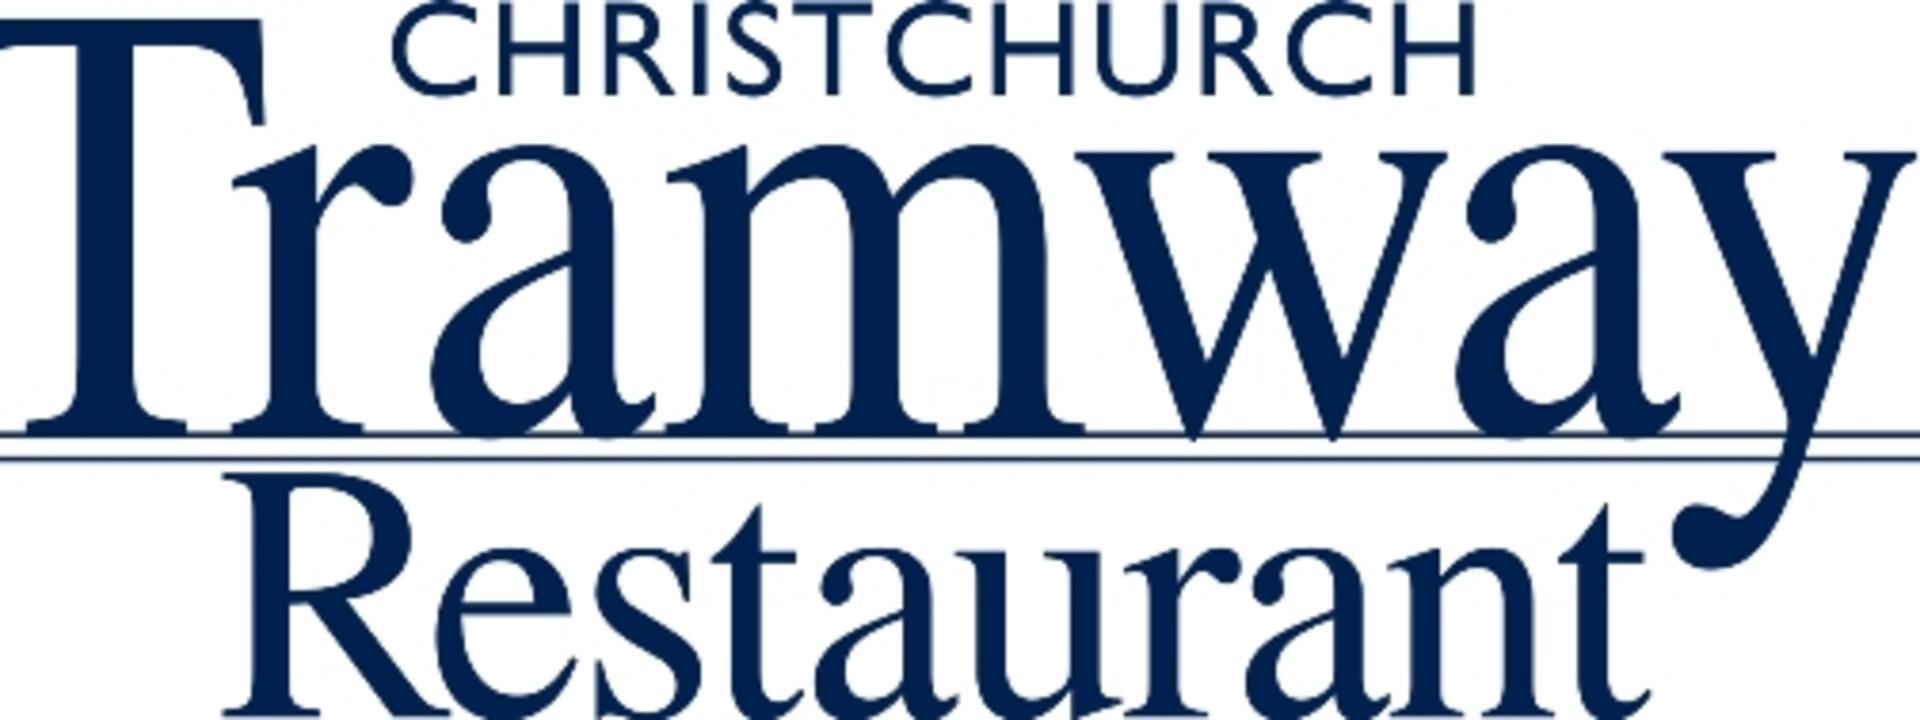 tramway-restaurant-logo-blue-small.jpg